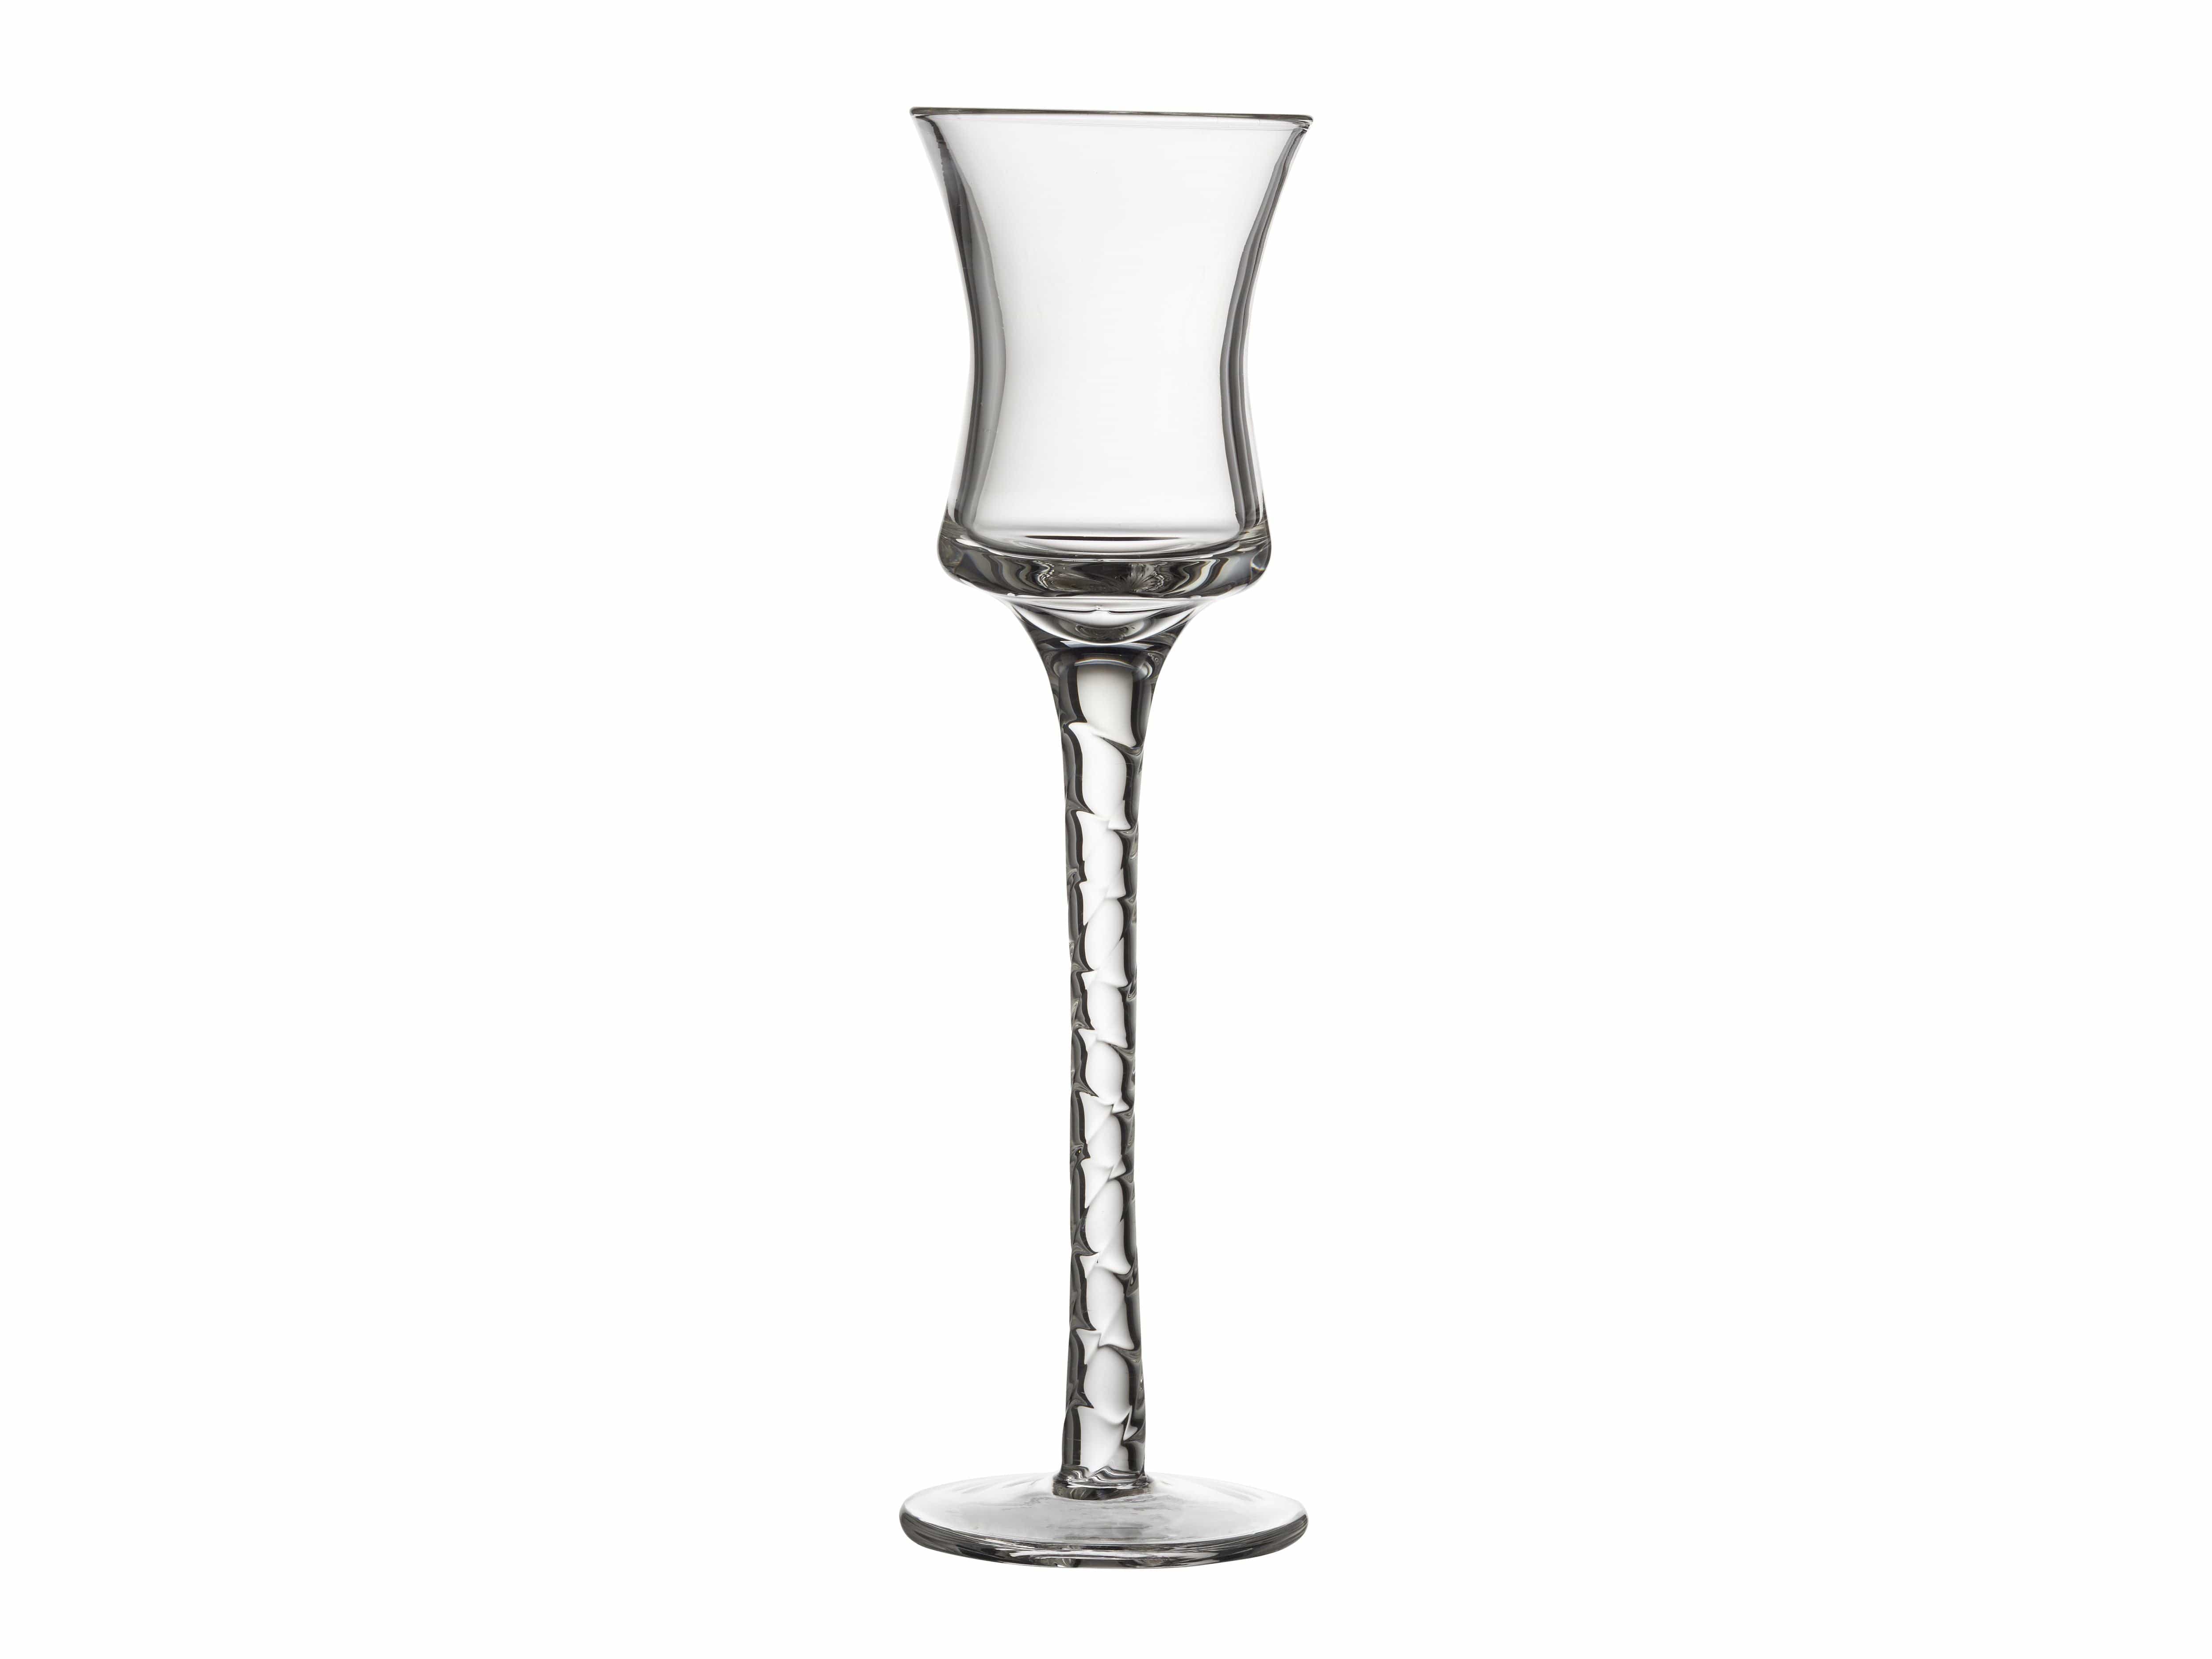 Lyngby Glas Rome Snap Glass 18 cm 6 ks. Osel.